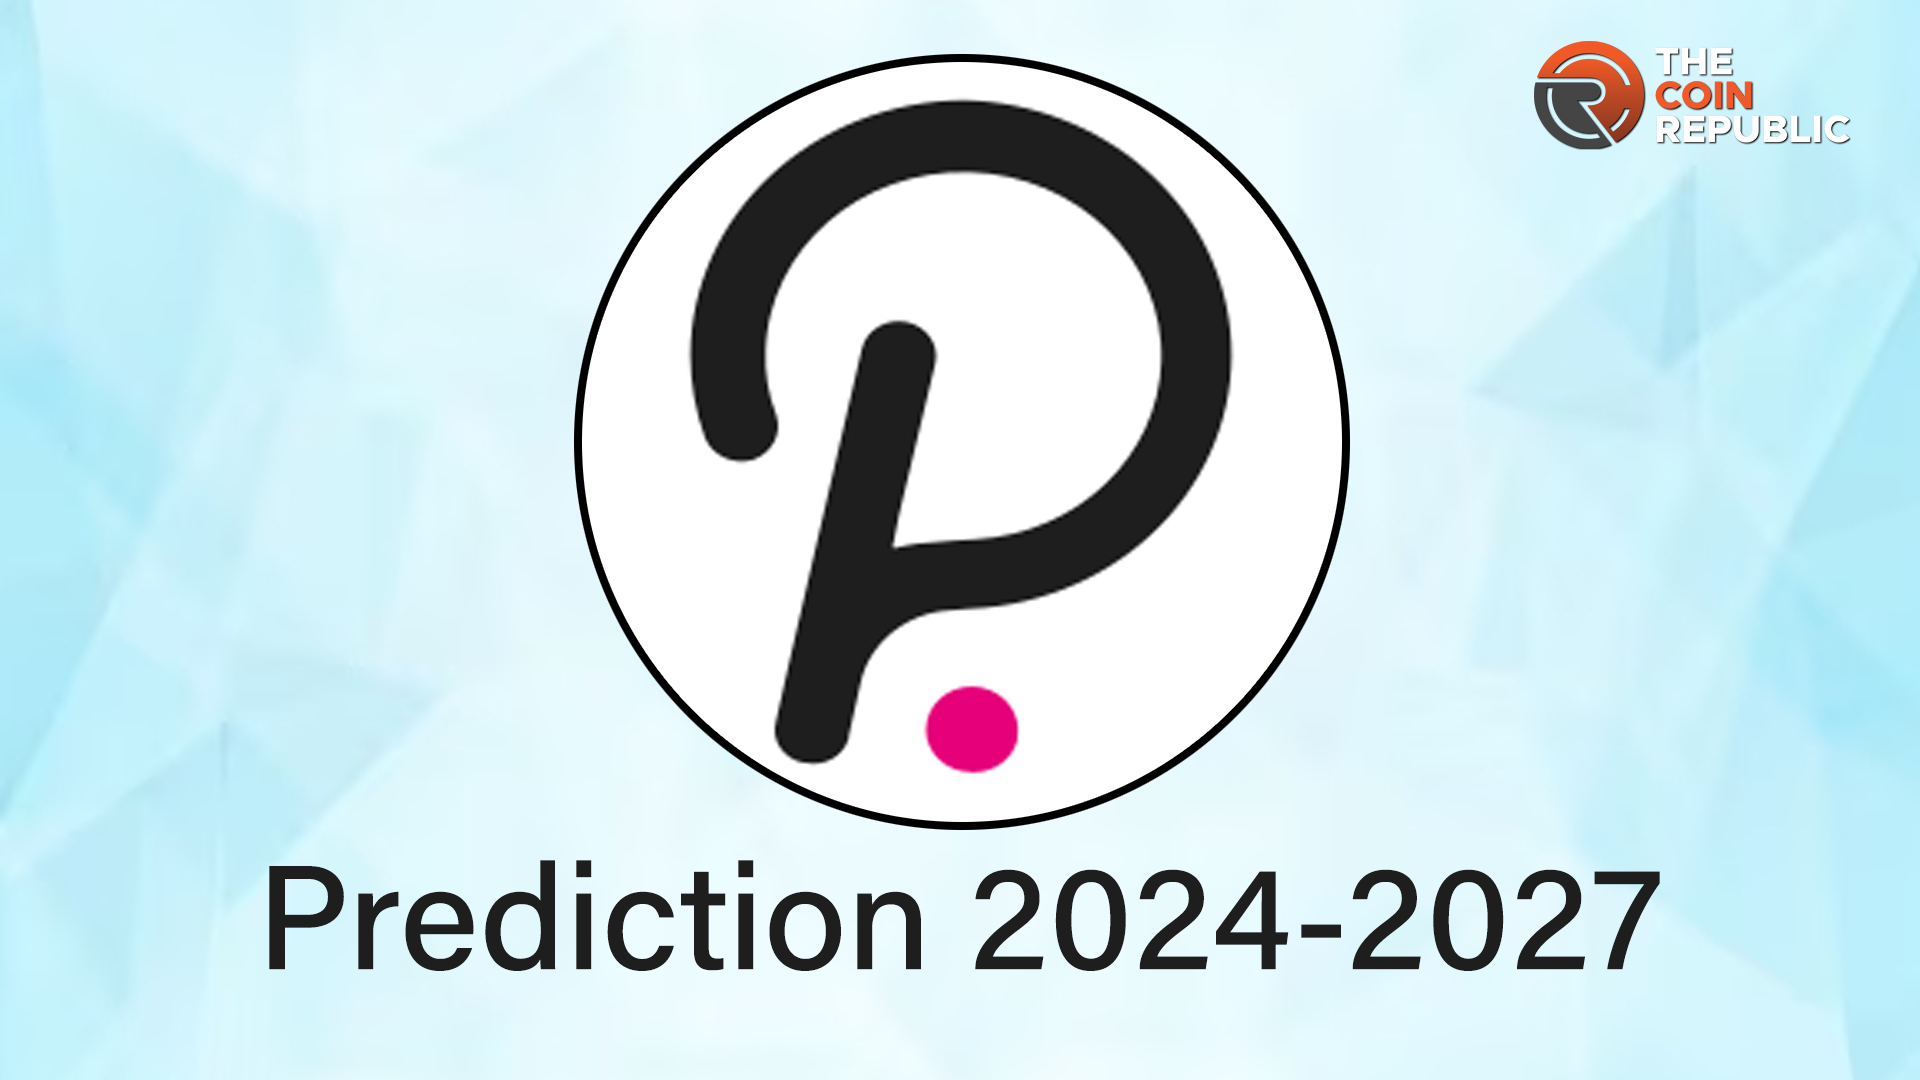 DOT Price Prediction 2024-2027: Will DOT Reach $50 Soon?